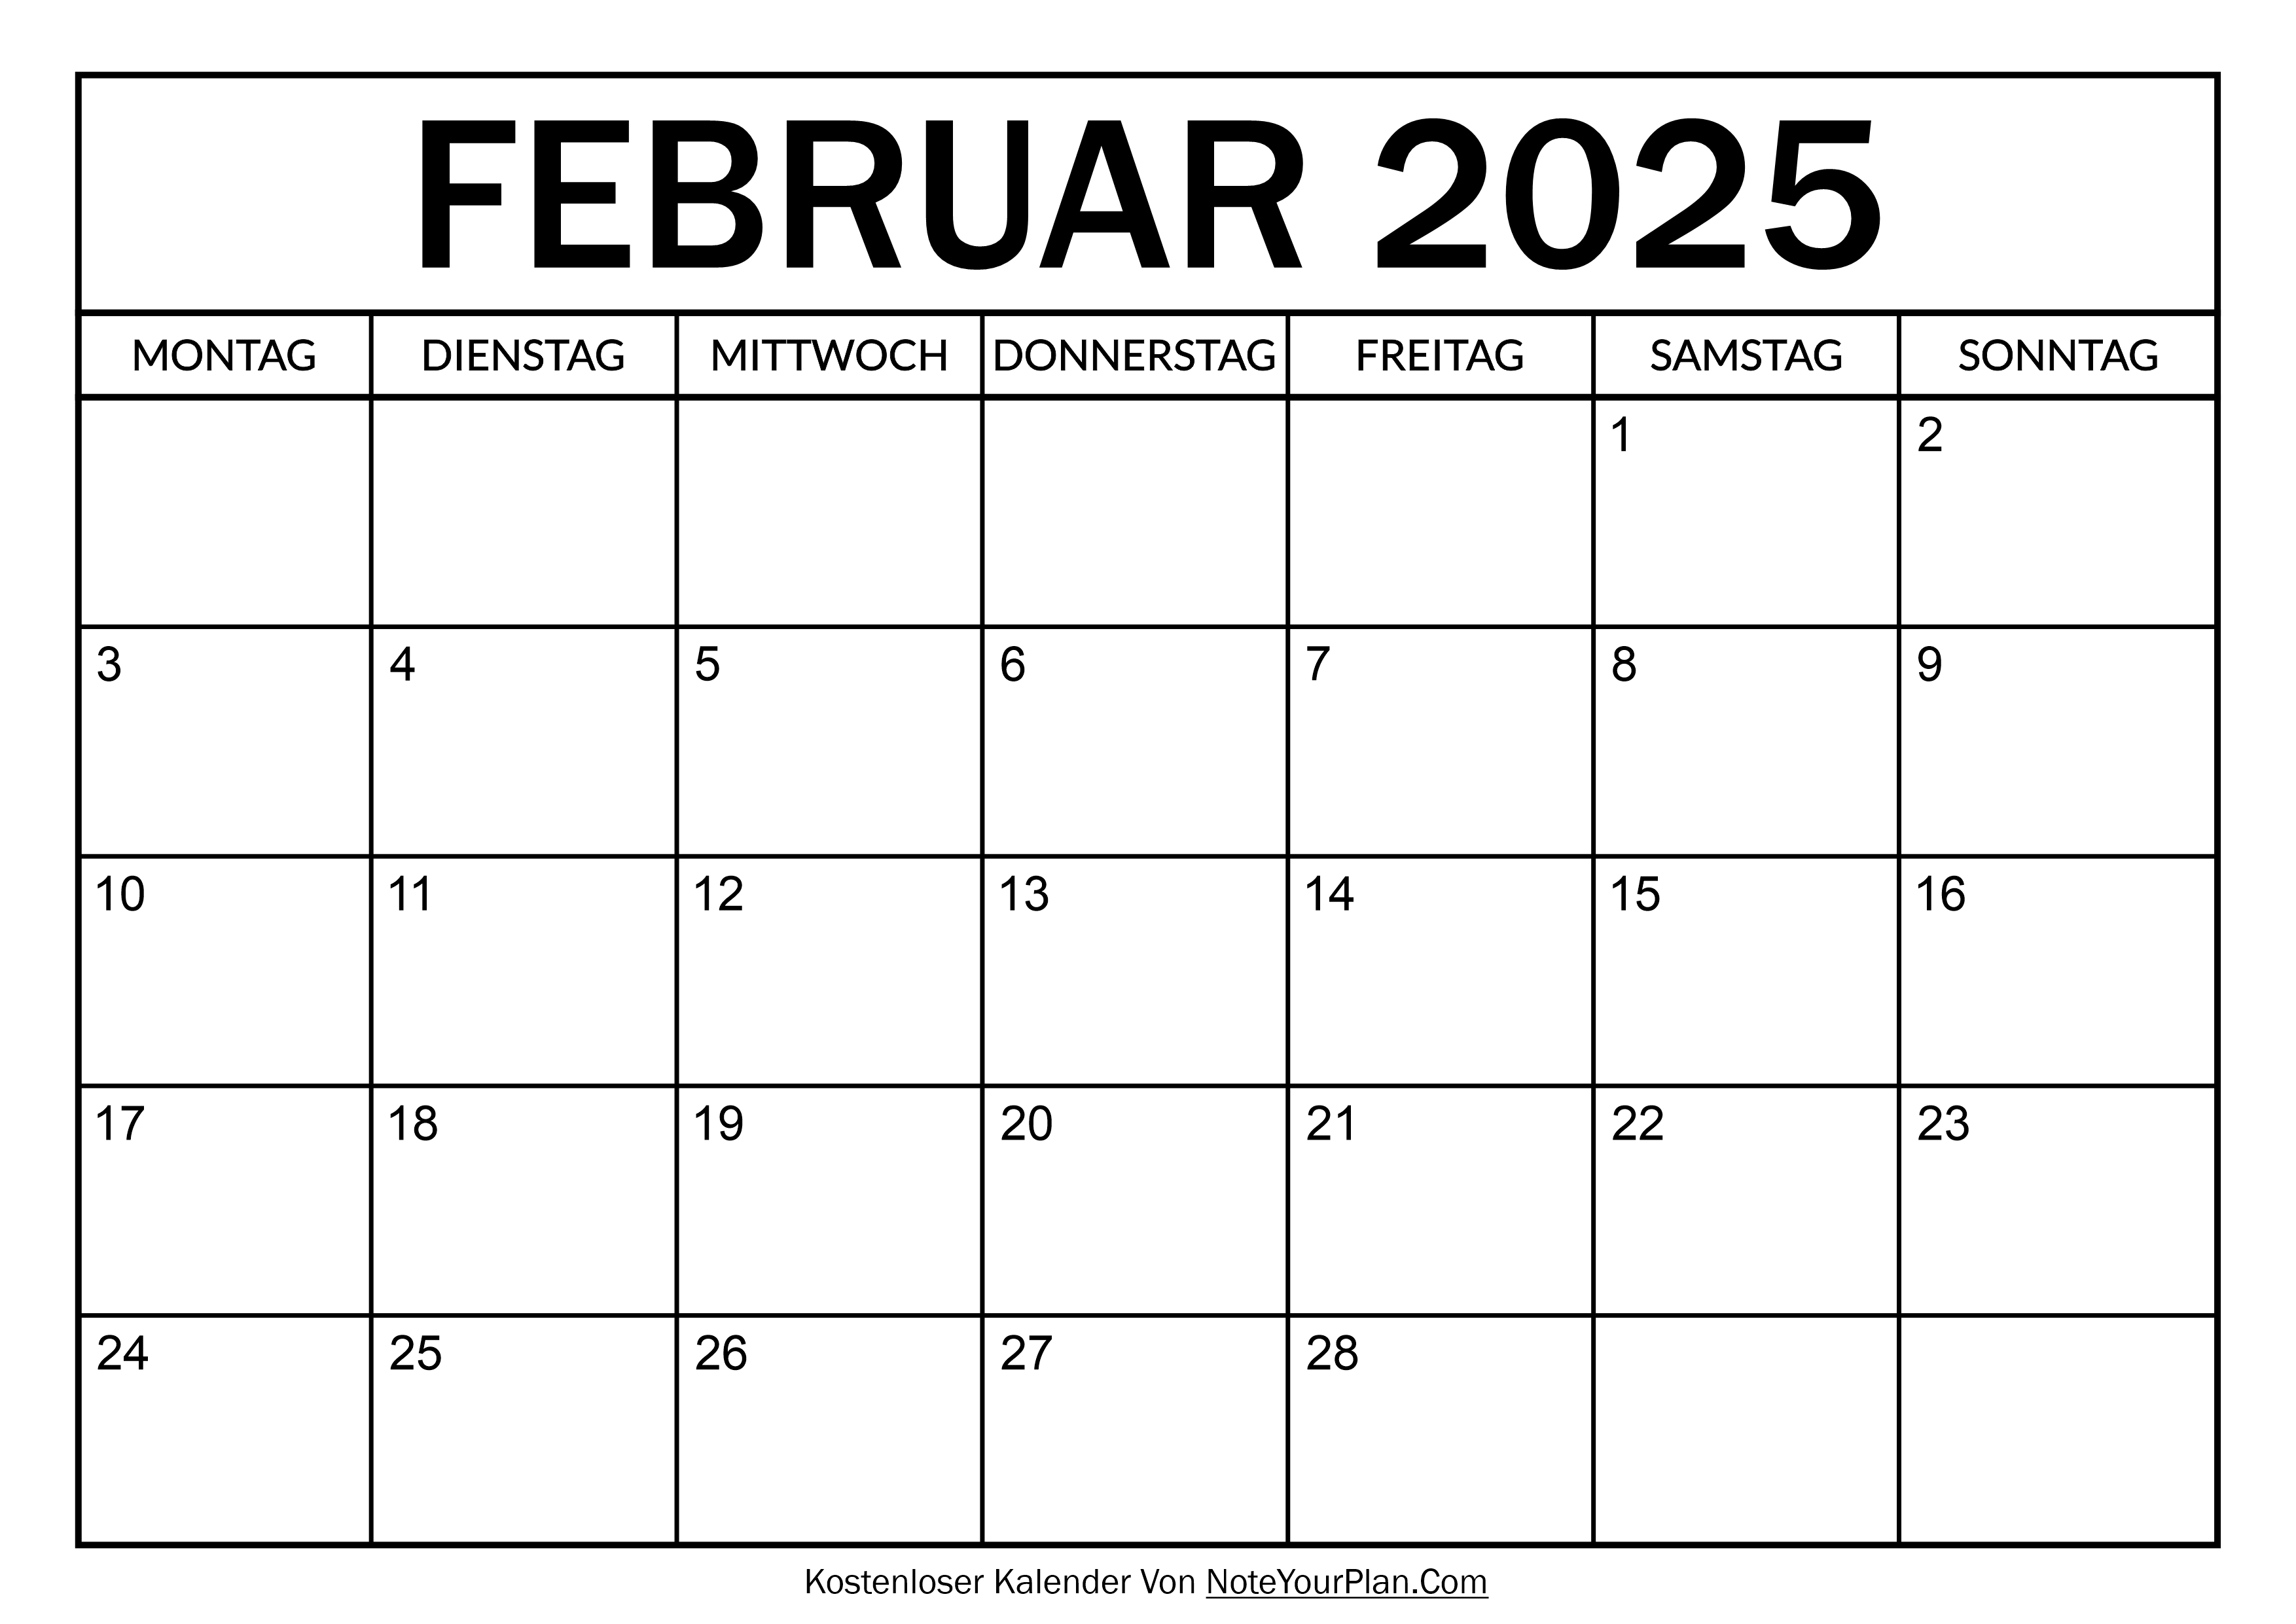 Kalender für Februar 2025